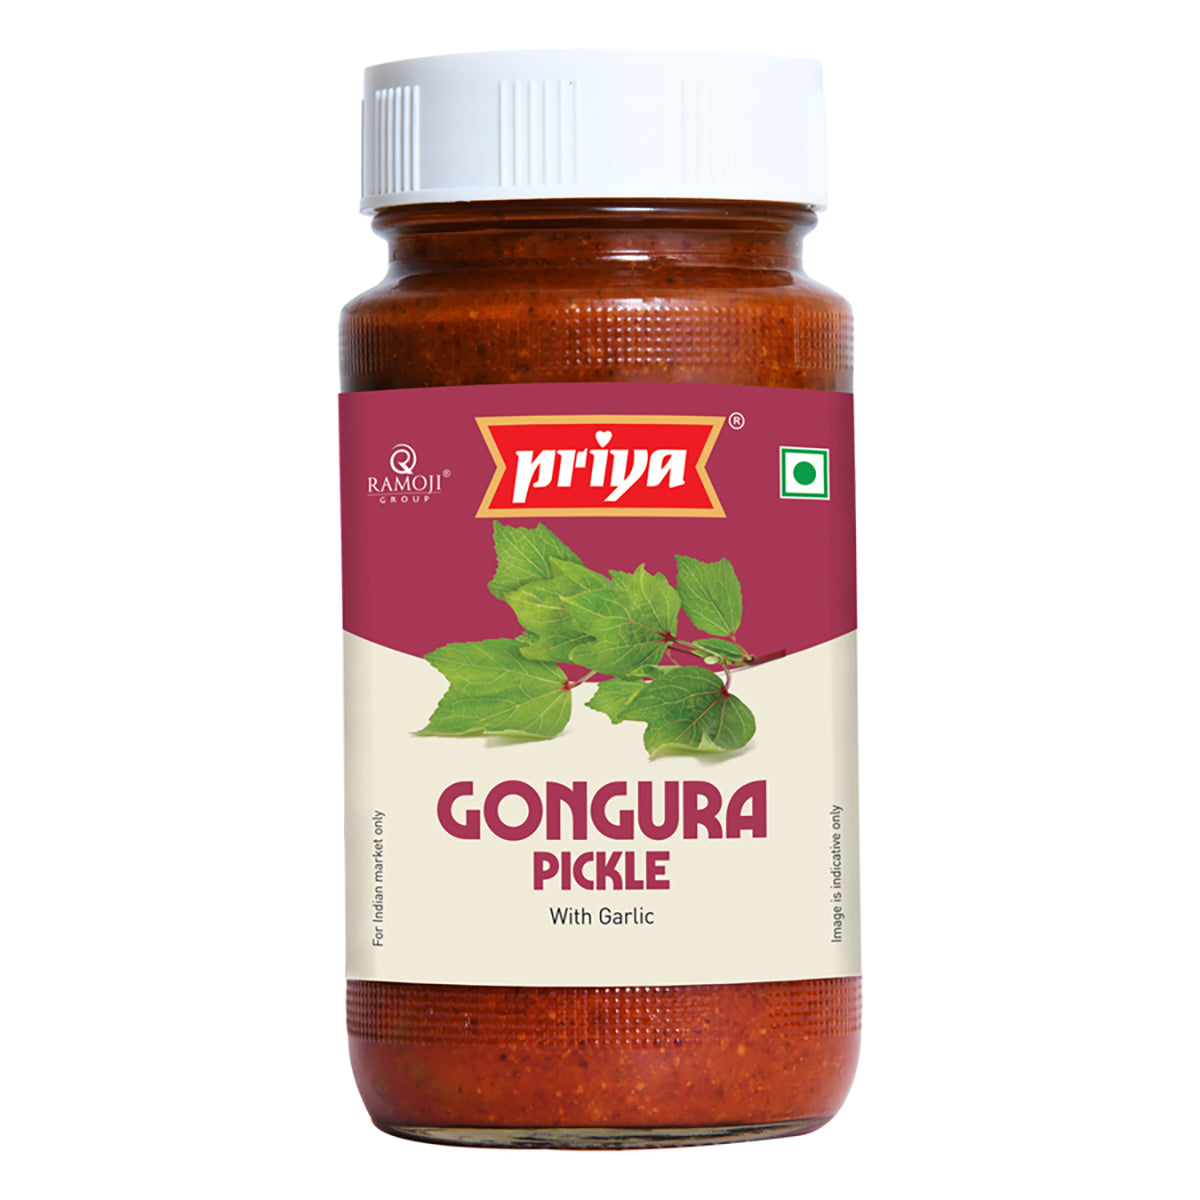 Gongura Pickle online